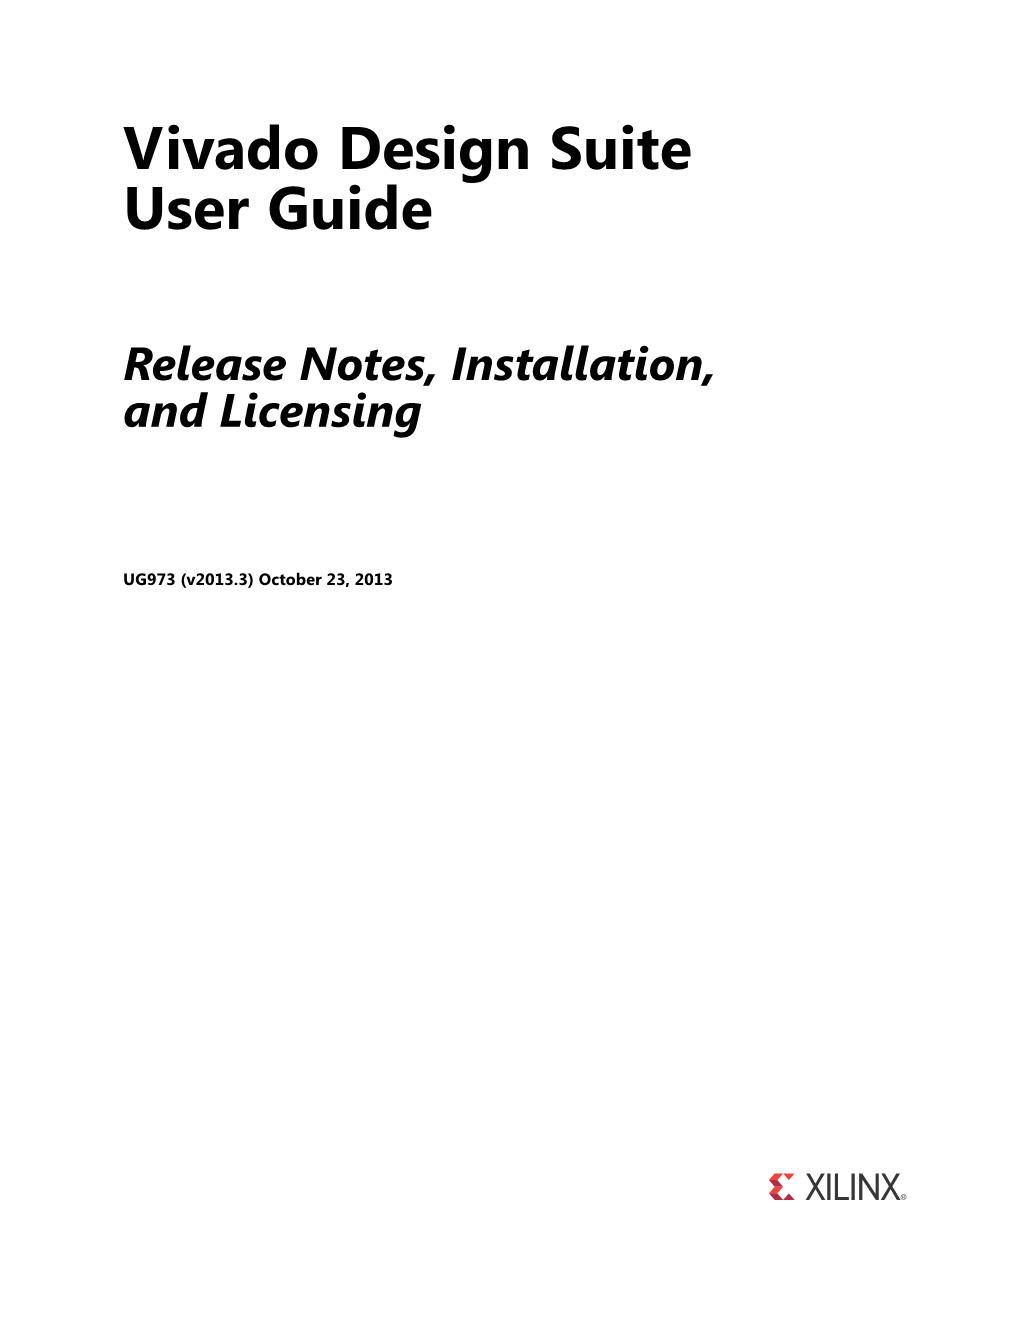 Xilinx Vivado Design Suite User Guide: Release Notes, Installation, And